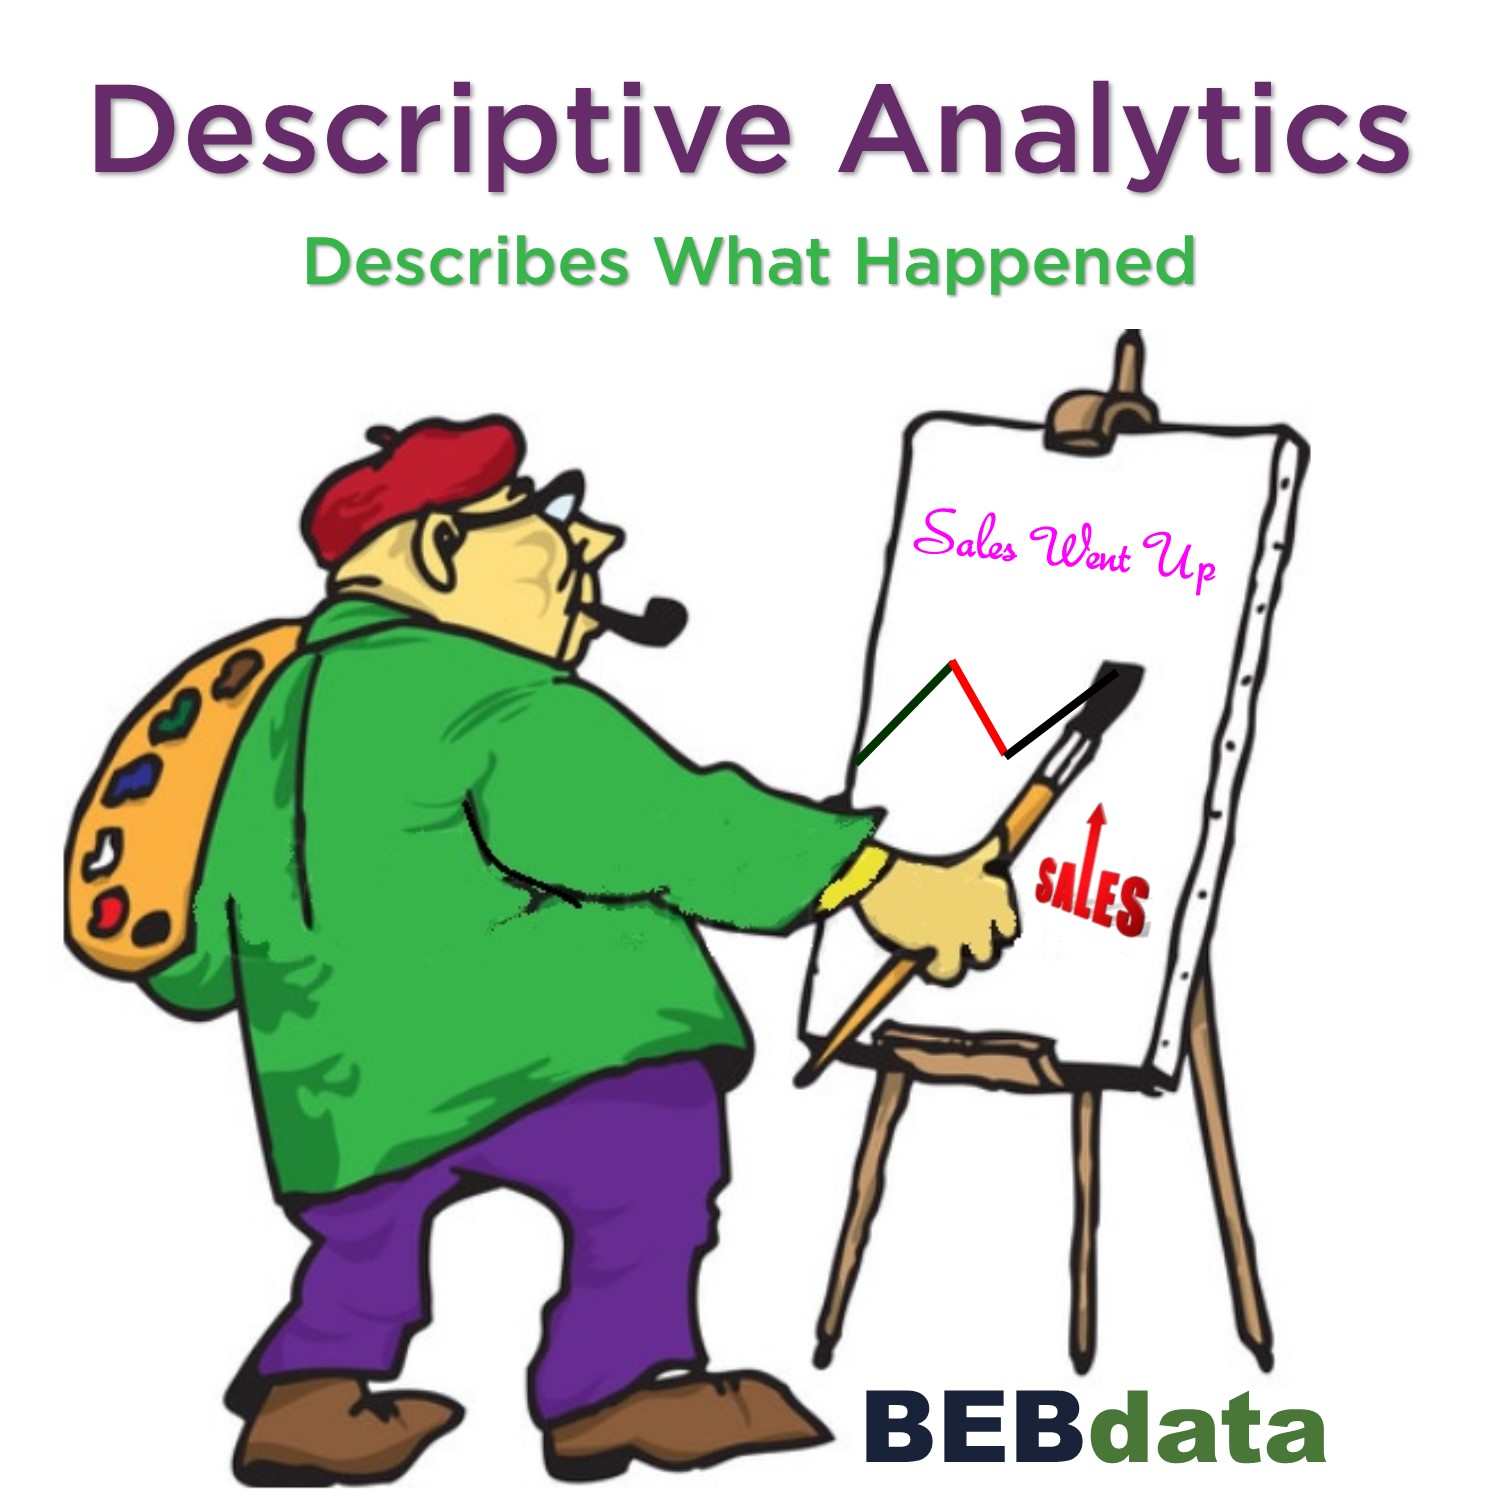 Descriptive analytics